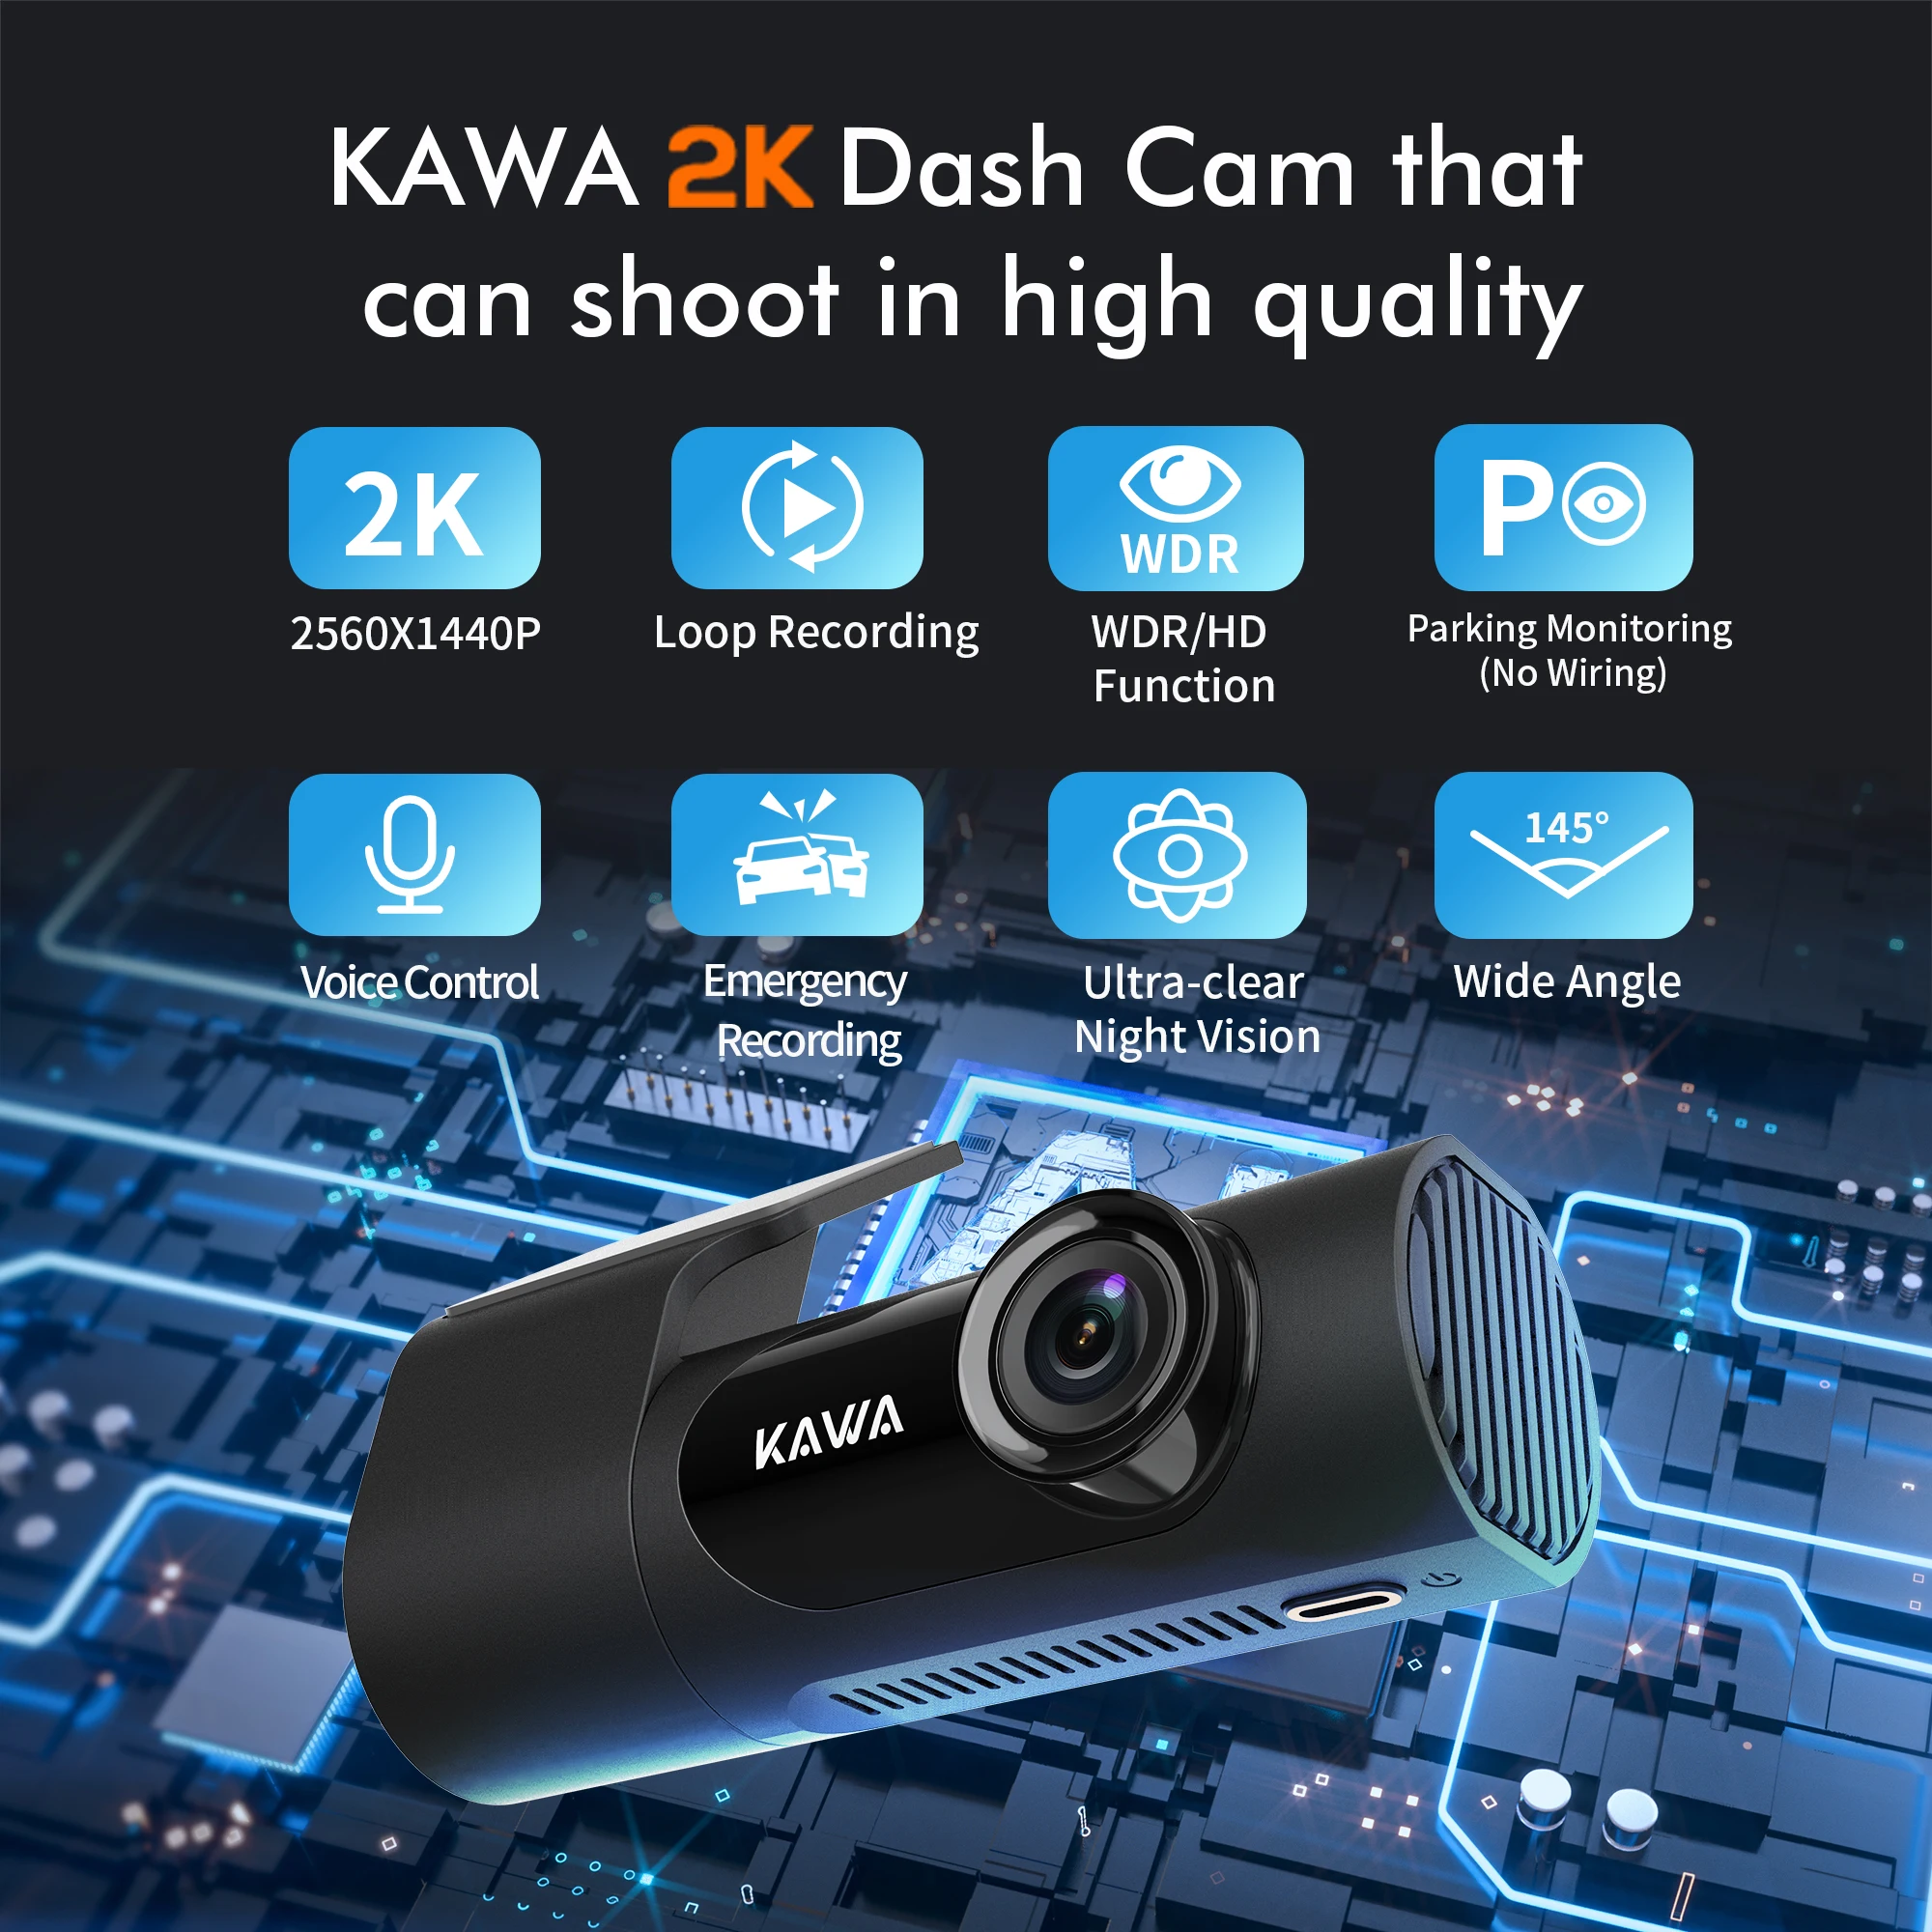 https://ae01.alicdn.com/kf/S3eb4f3e3881b4229a3d308b58c312d85M/KAWA-2K-1440P-HD-WiFi-Dash-Cam-for-Car-DVR-Camera-Video-Recorder-Auto-Night-Vision.jpg